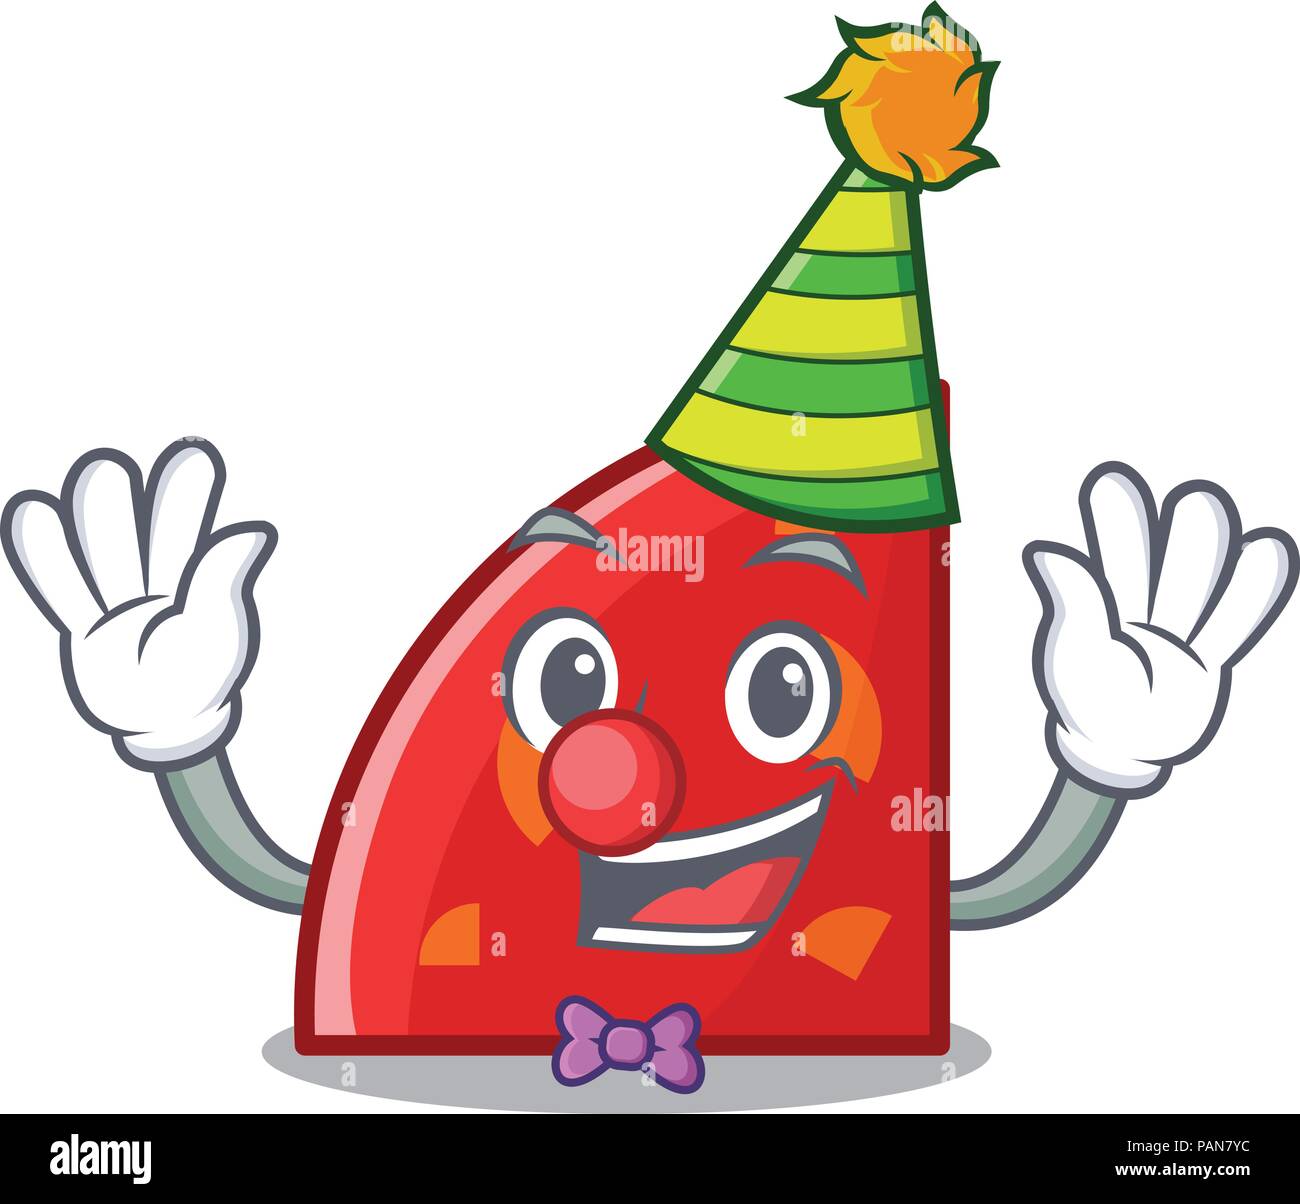 Clown quadrant mascot cartoon style Stock Vector